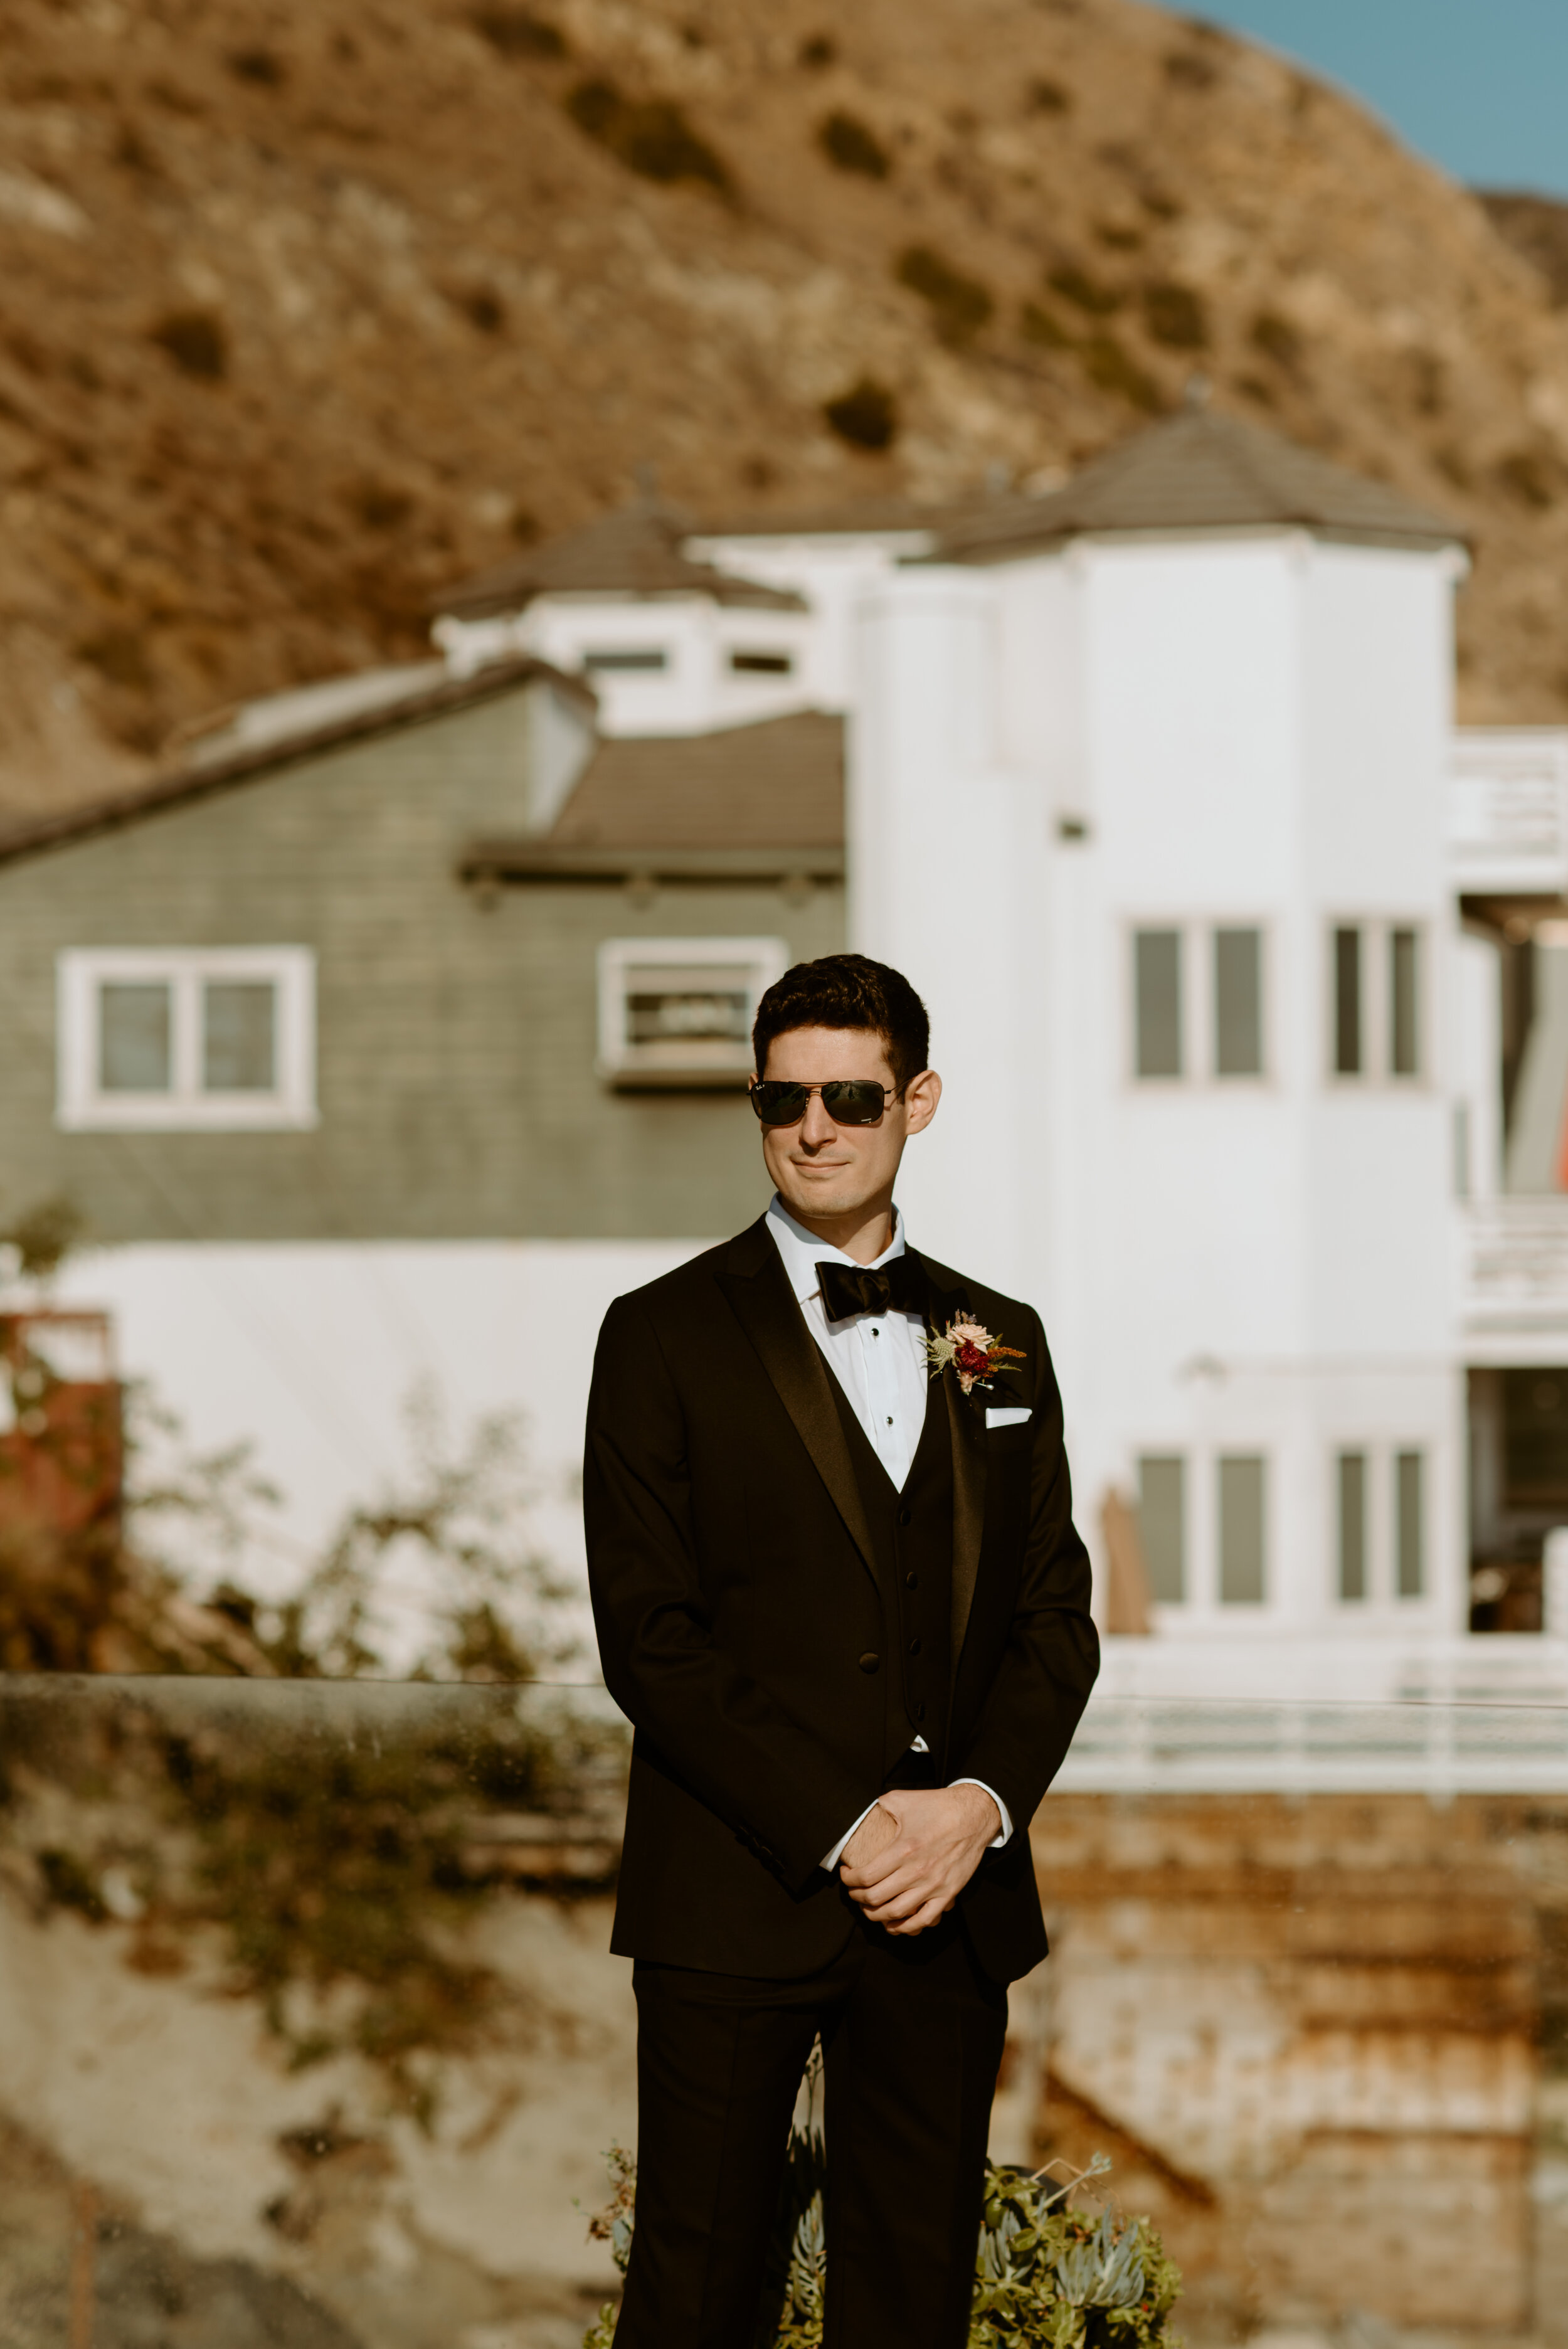 Malibu Airbnb Elopement | El Matador Beach wedding | Point Dume Malibu Bride and Groom portraits | California Coast | California Elopement photographer | elopement ceremony 